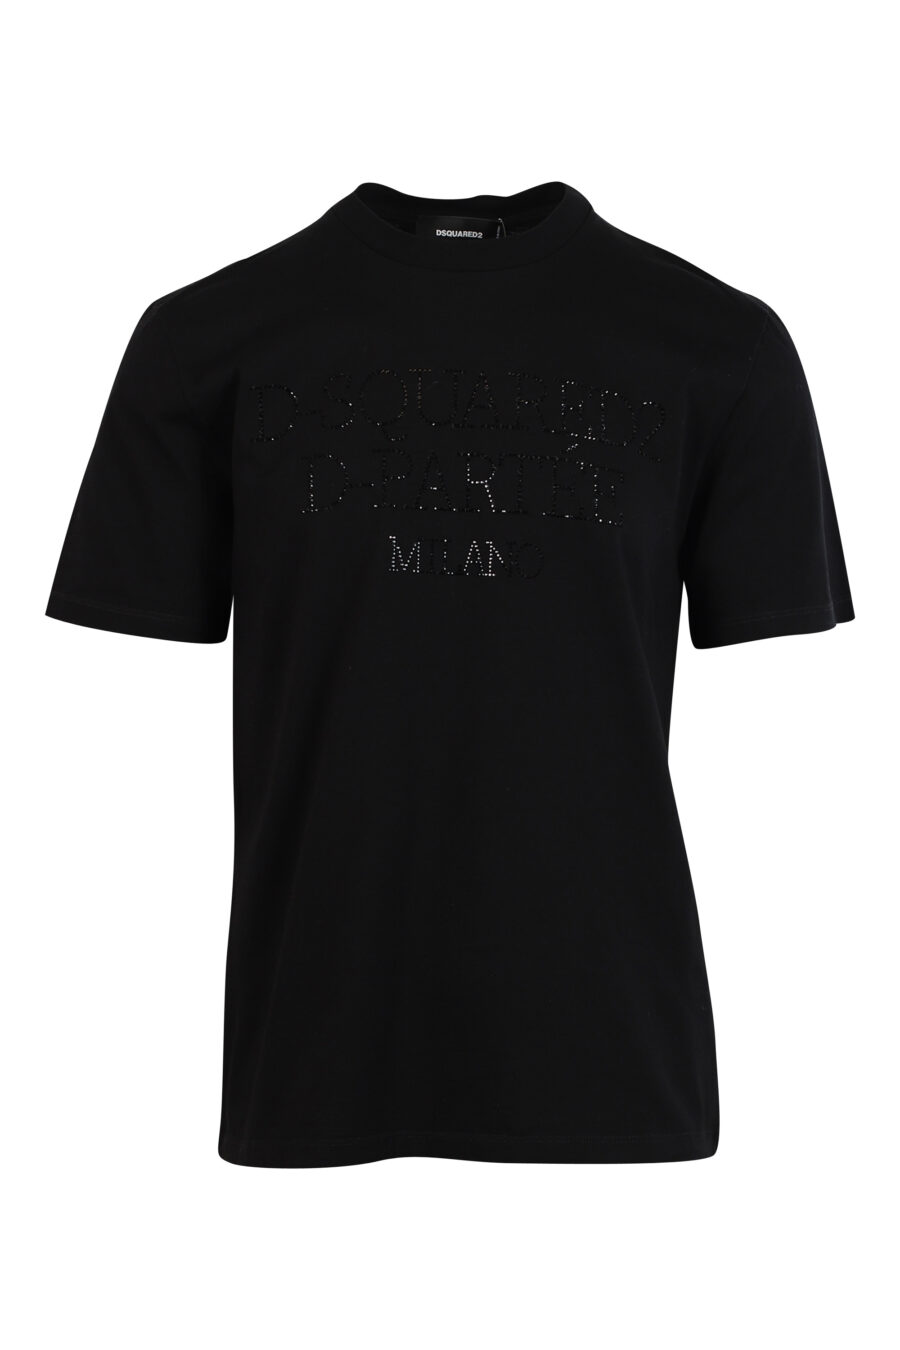 T-shirt noir avec maxilogo noir gaufré - 8052134990285